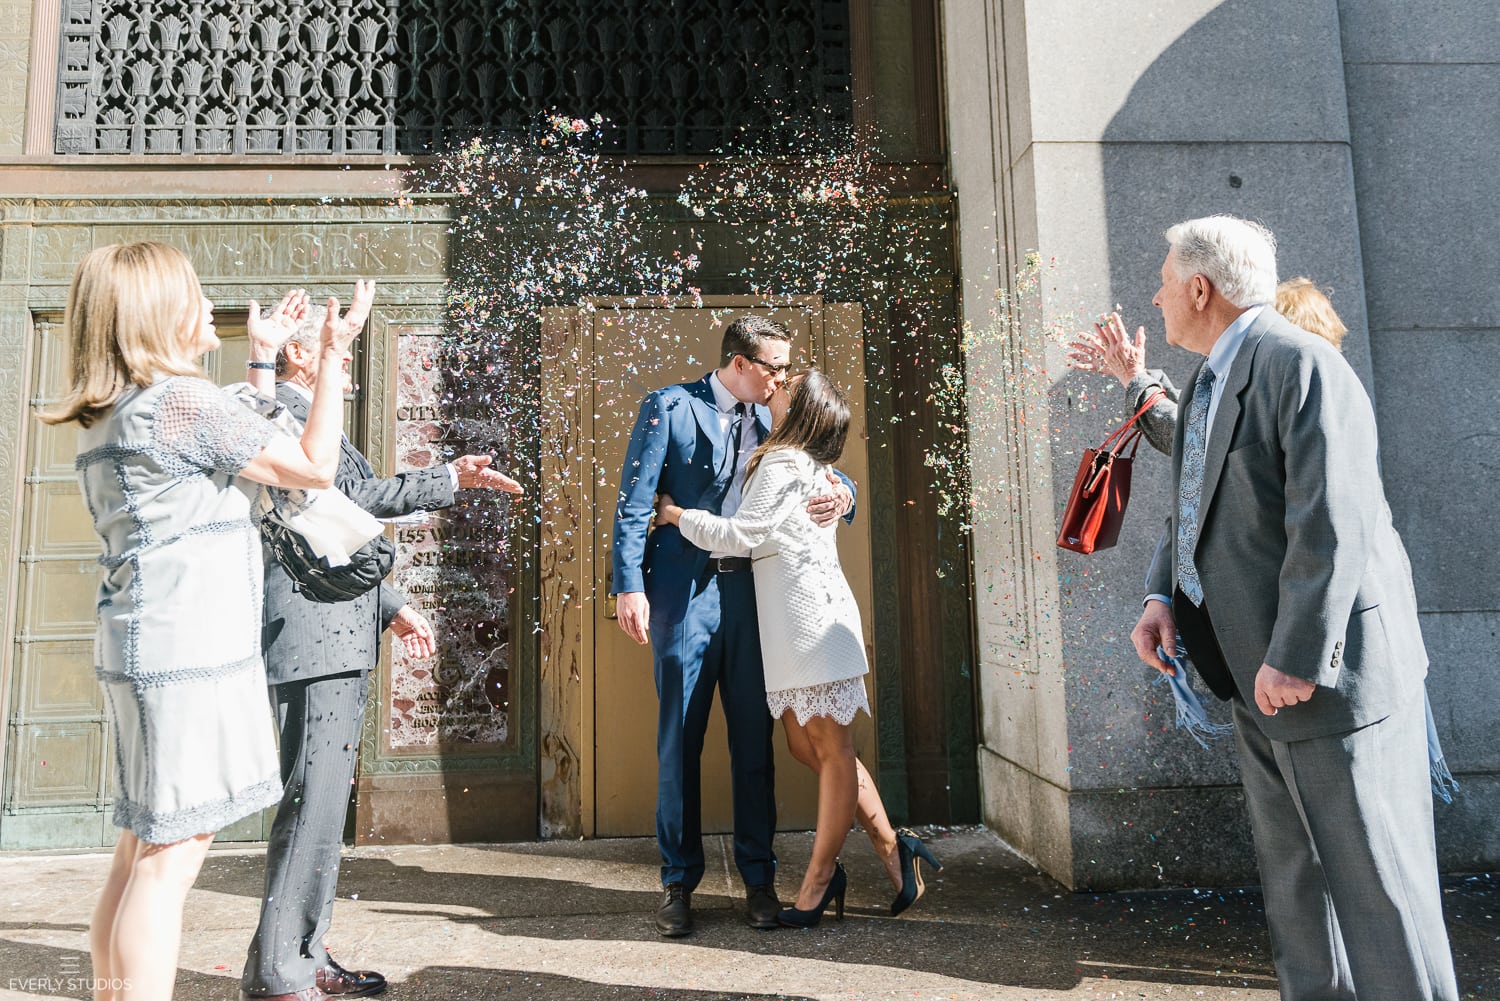 New York City Hall wedding. Photo by Everly Studios, www.everlystudios.com